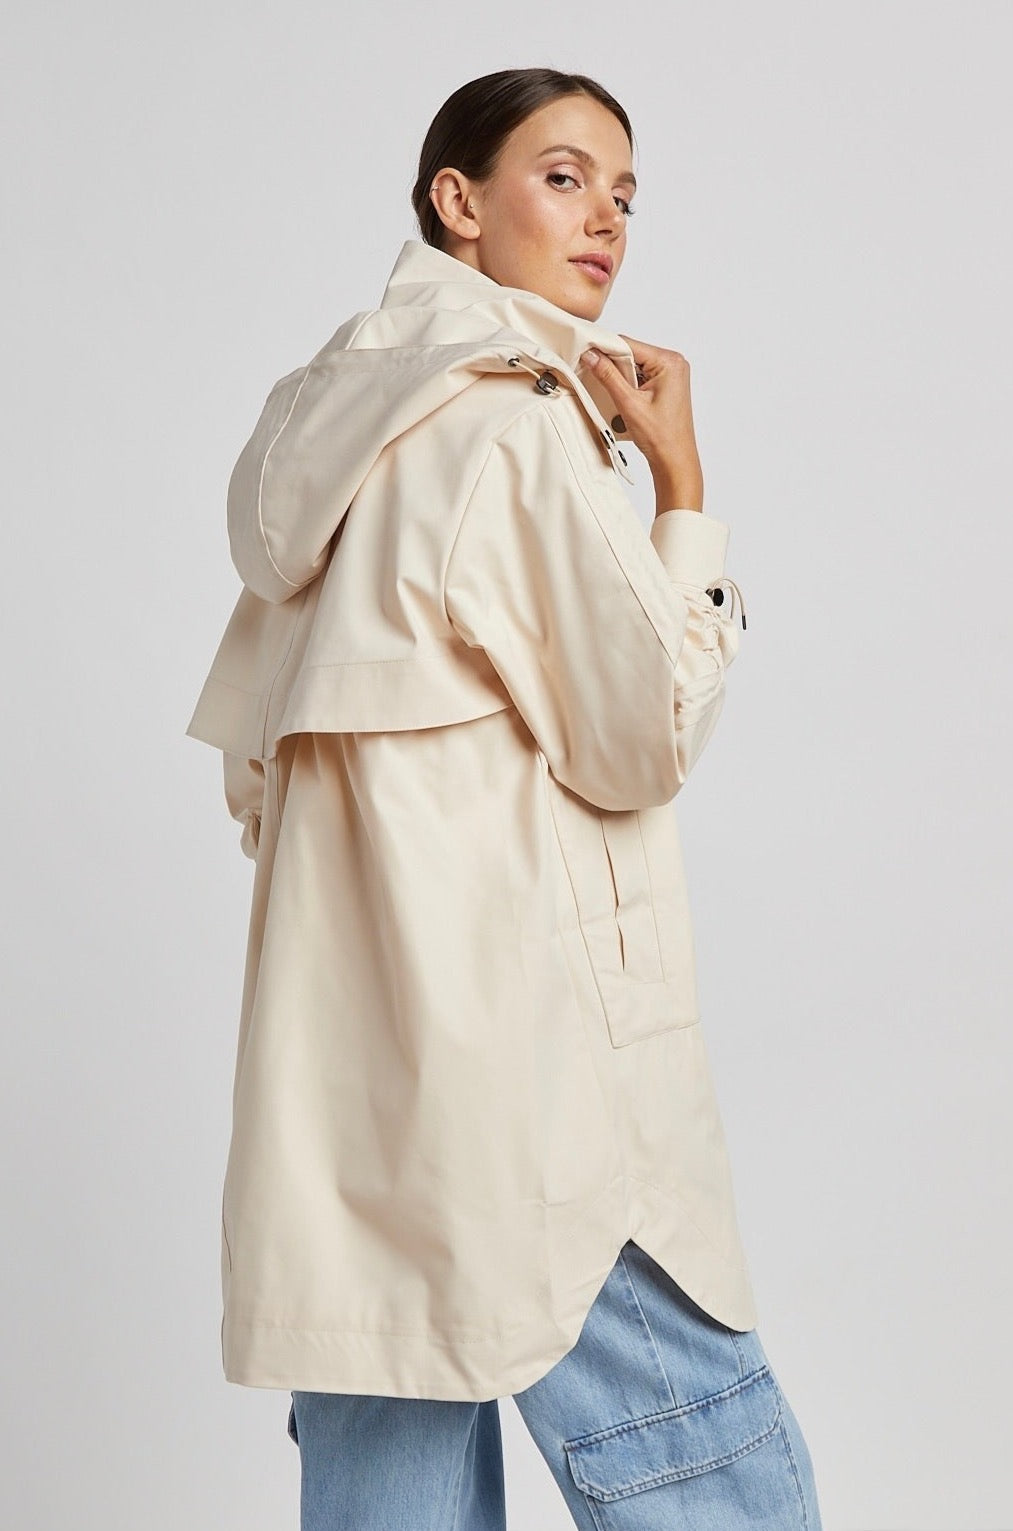 Adroit Atelier Ryan Water Repellent Rain Coat With Detachable Hood in Ivory